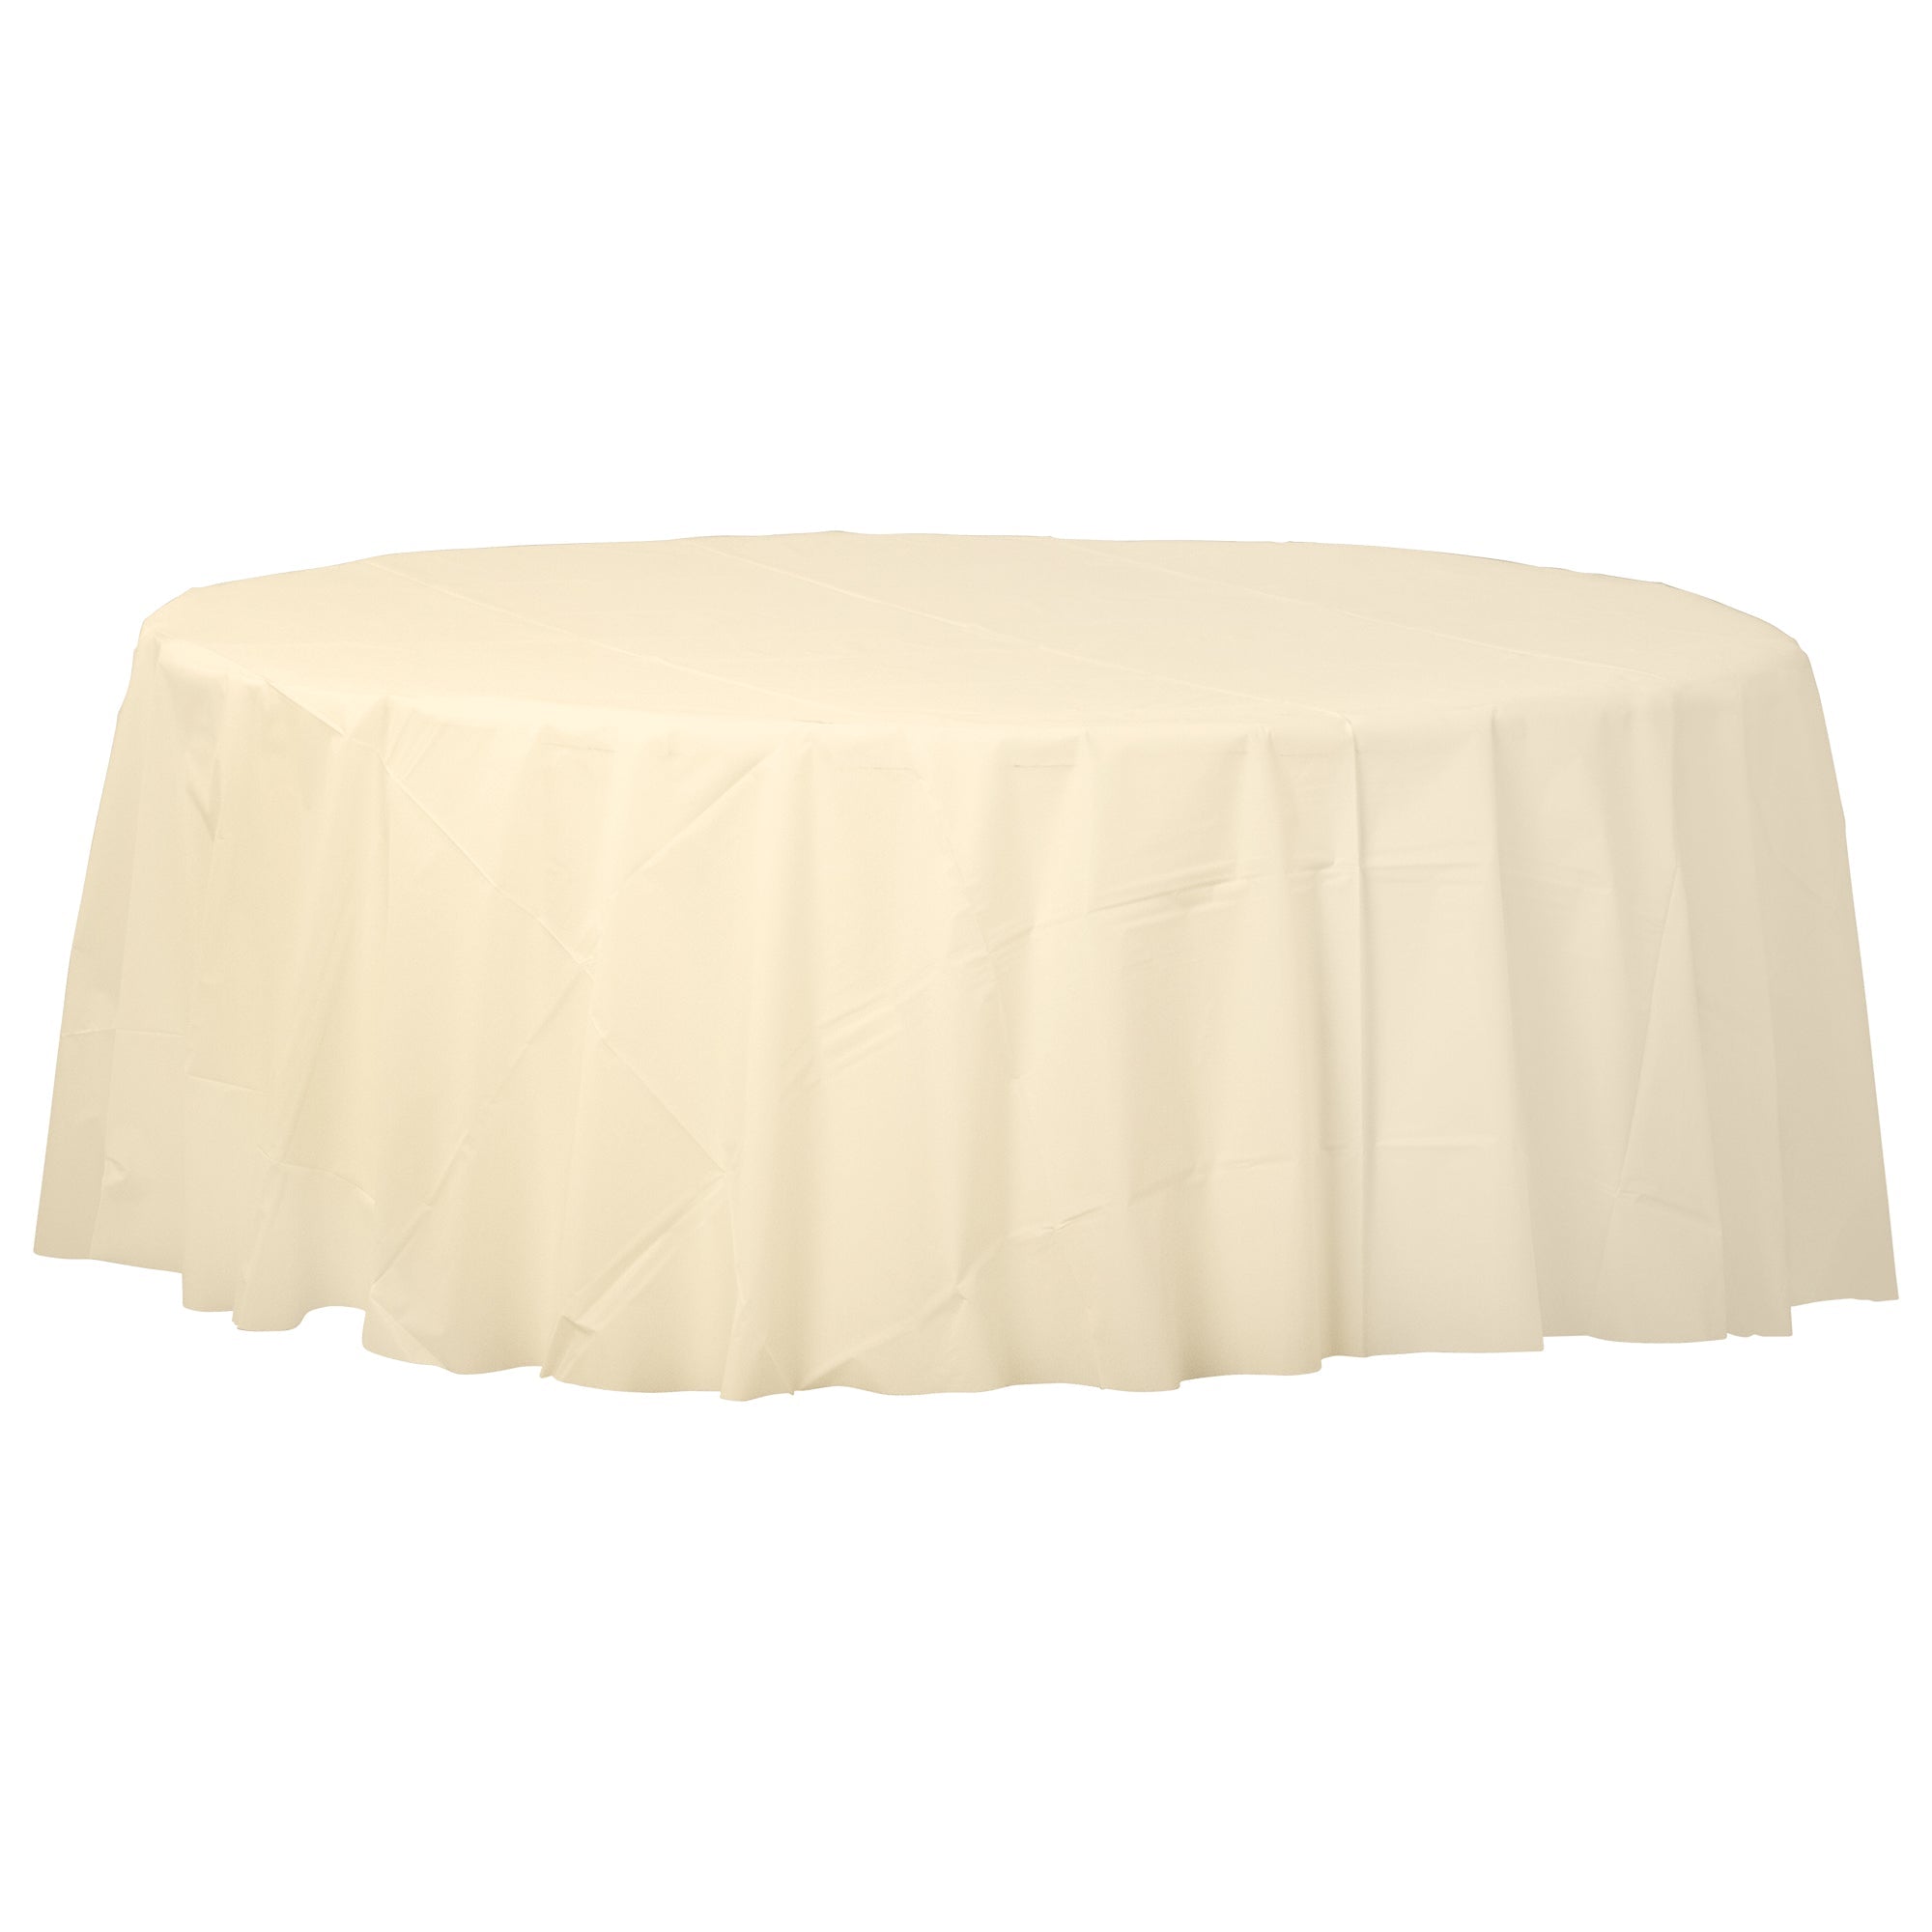 Vanilla Creme 84" Round Plastic Table Cover